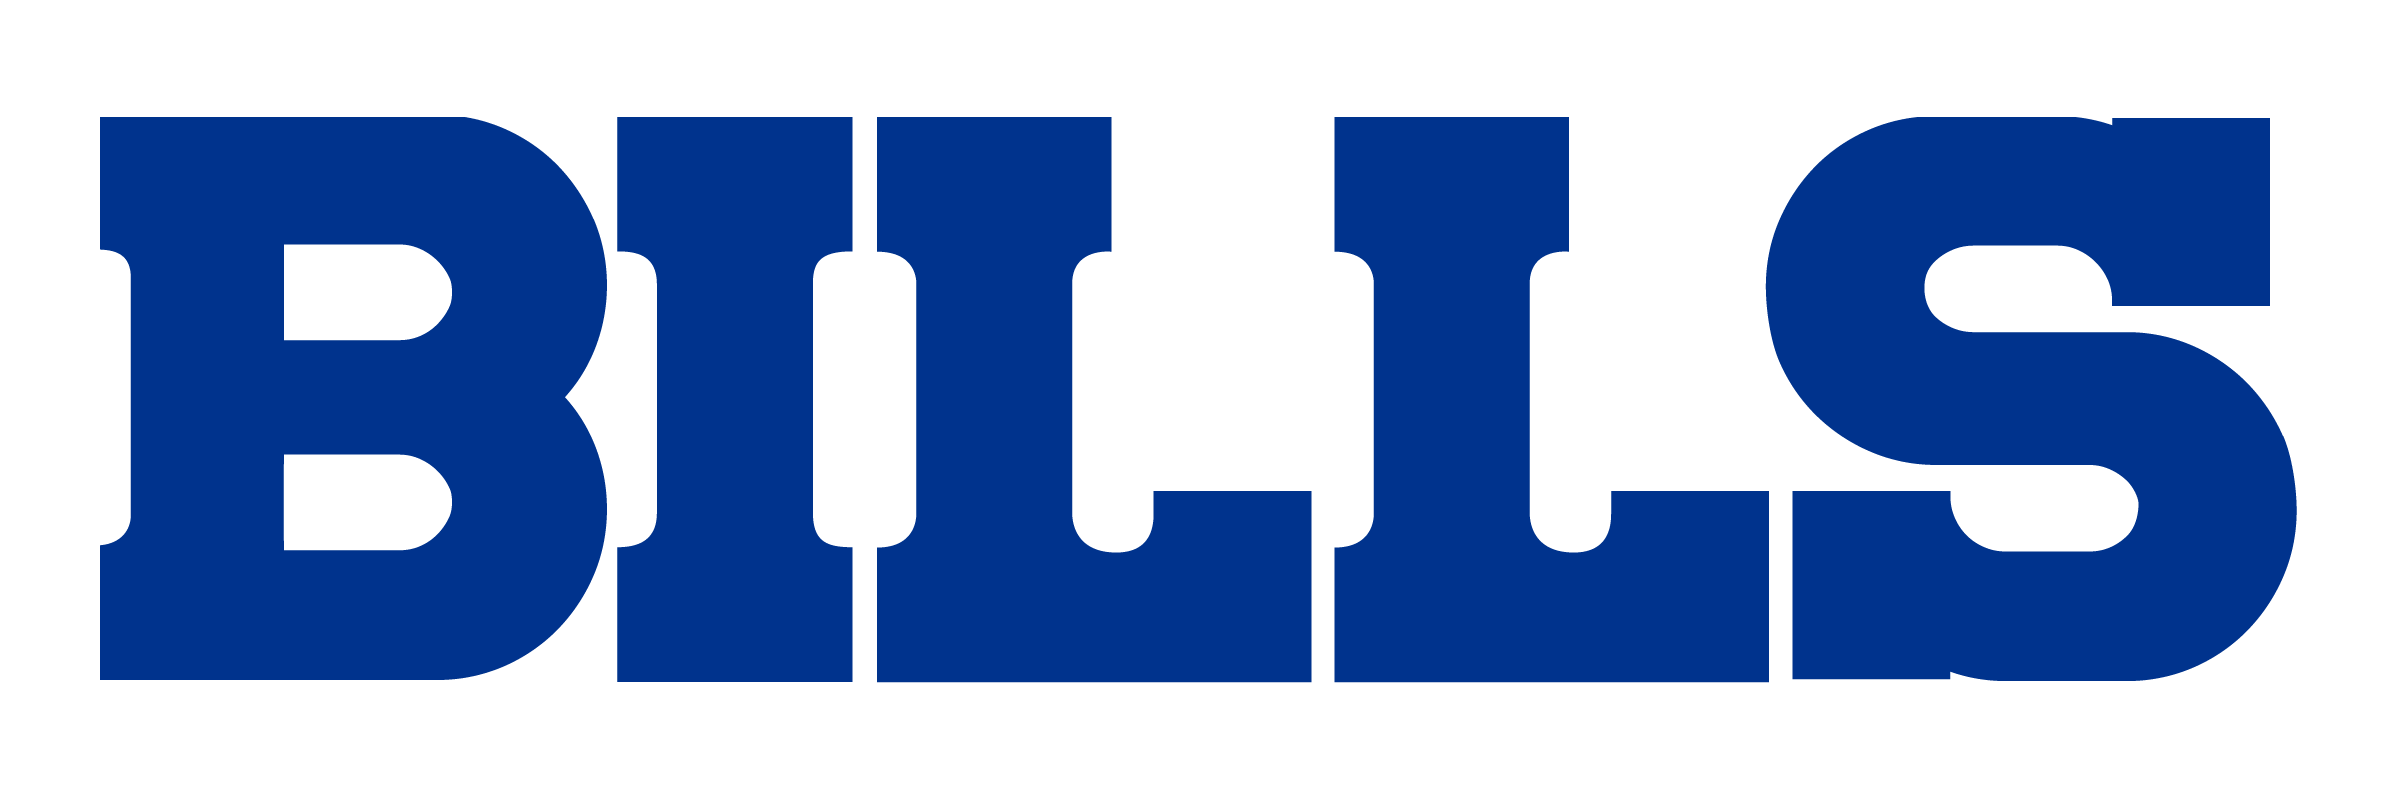 File:Buffalo Bills logo.svg -